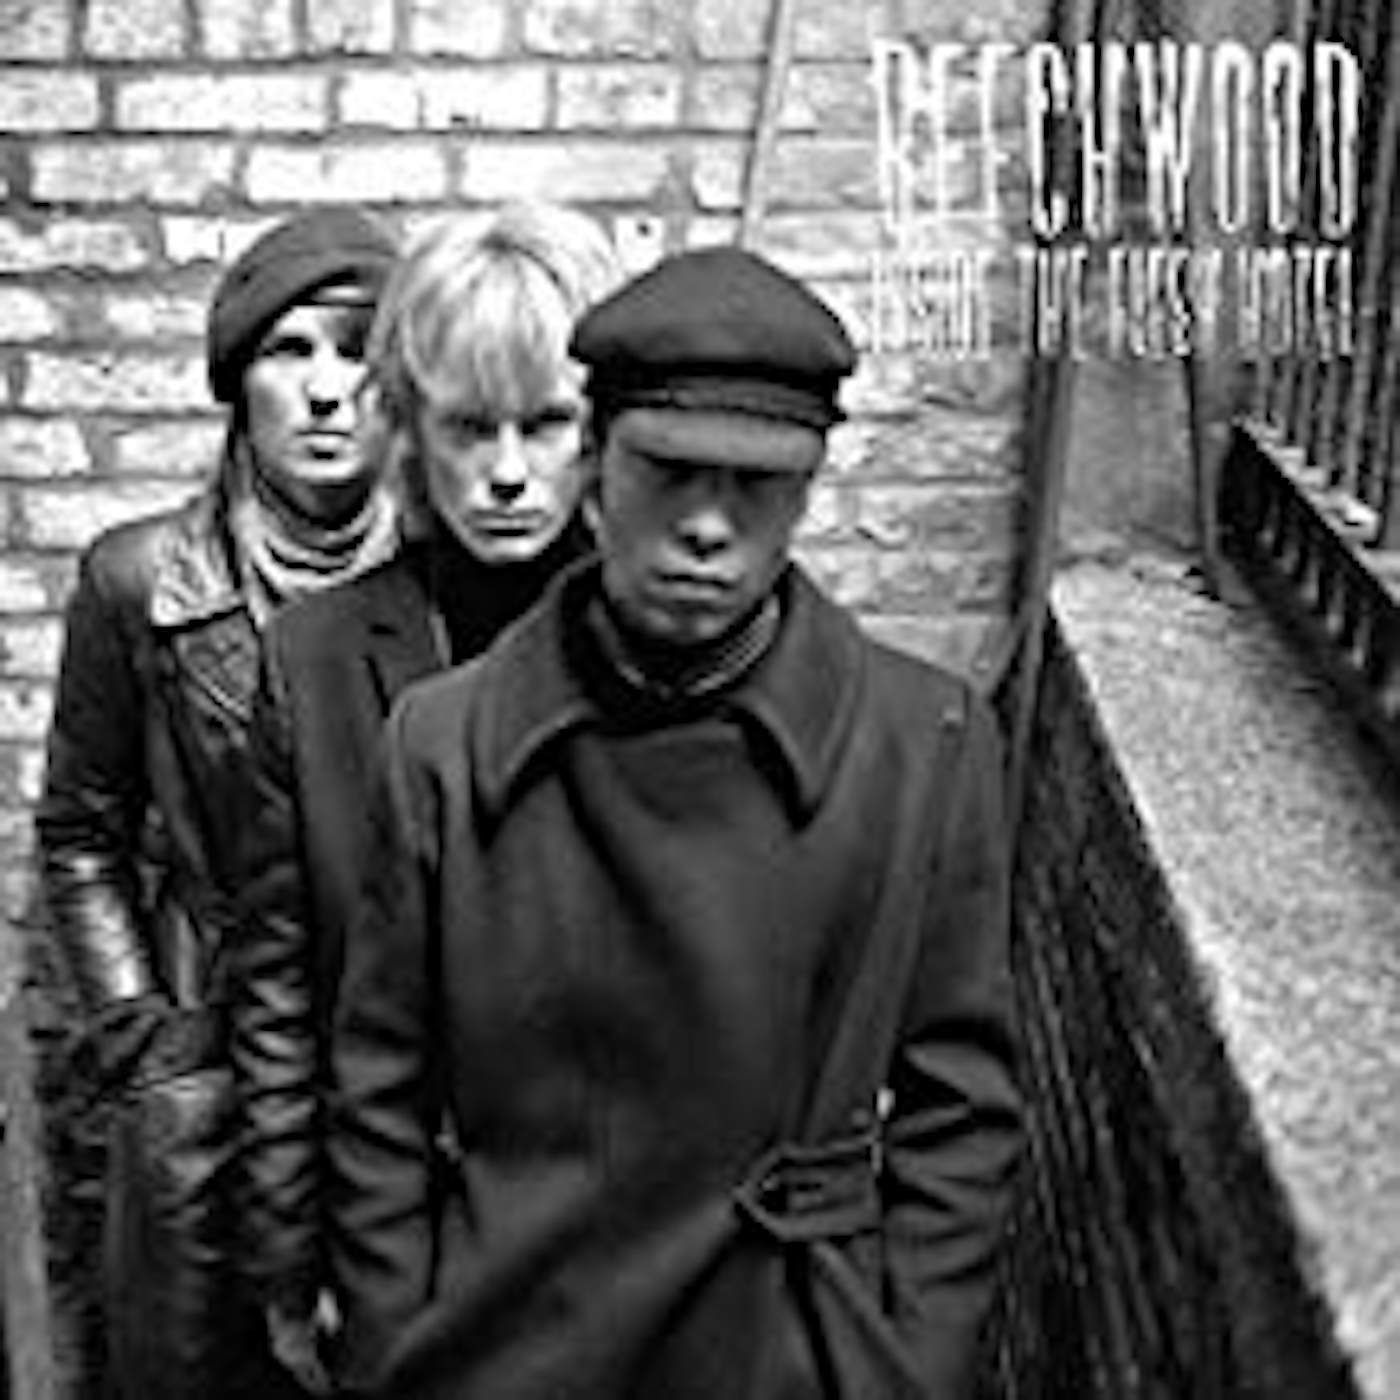 Beechwood Inside the Flesh Hotel Vinyl Record